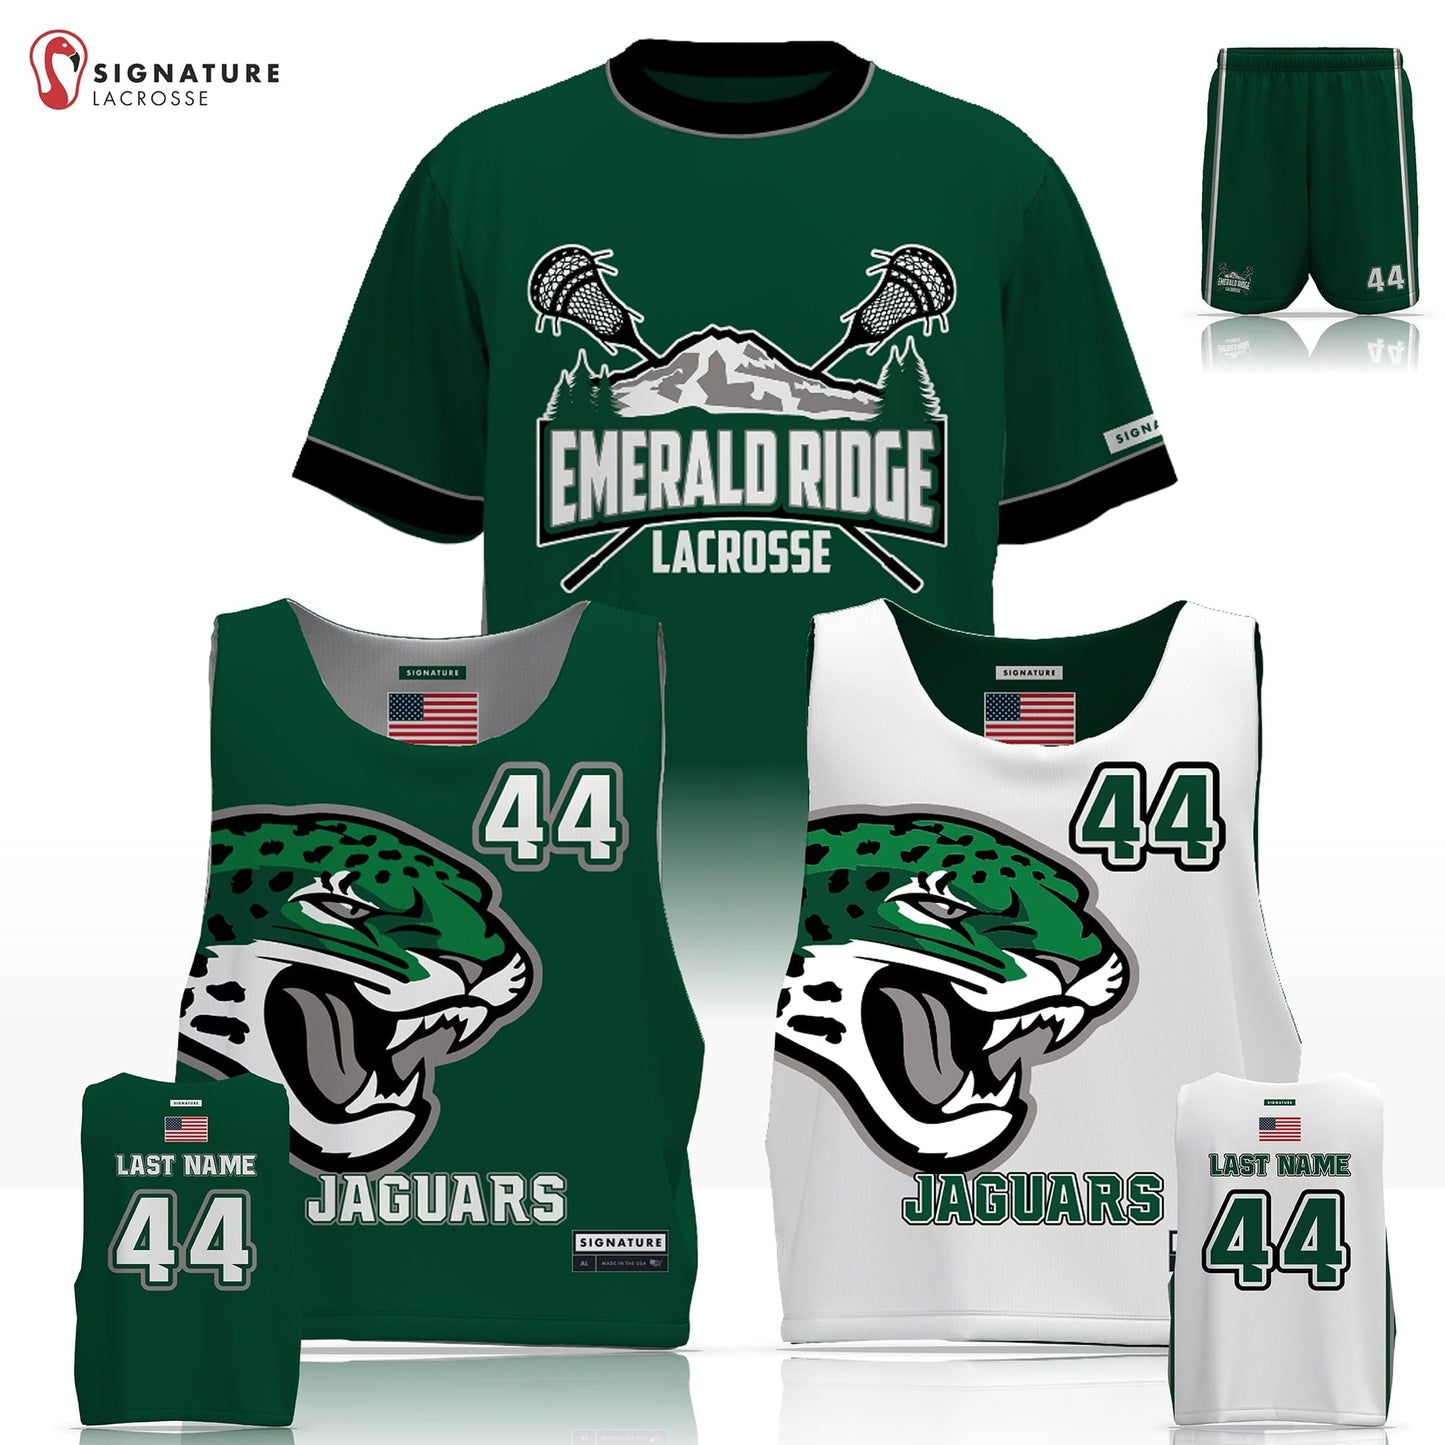 Emerald Ridge Lacrosse Men’s 3 Piece Game Package: Grade 7-8 Signature Lacrosse